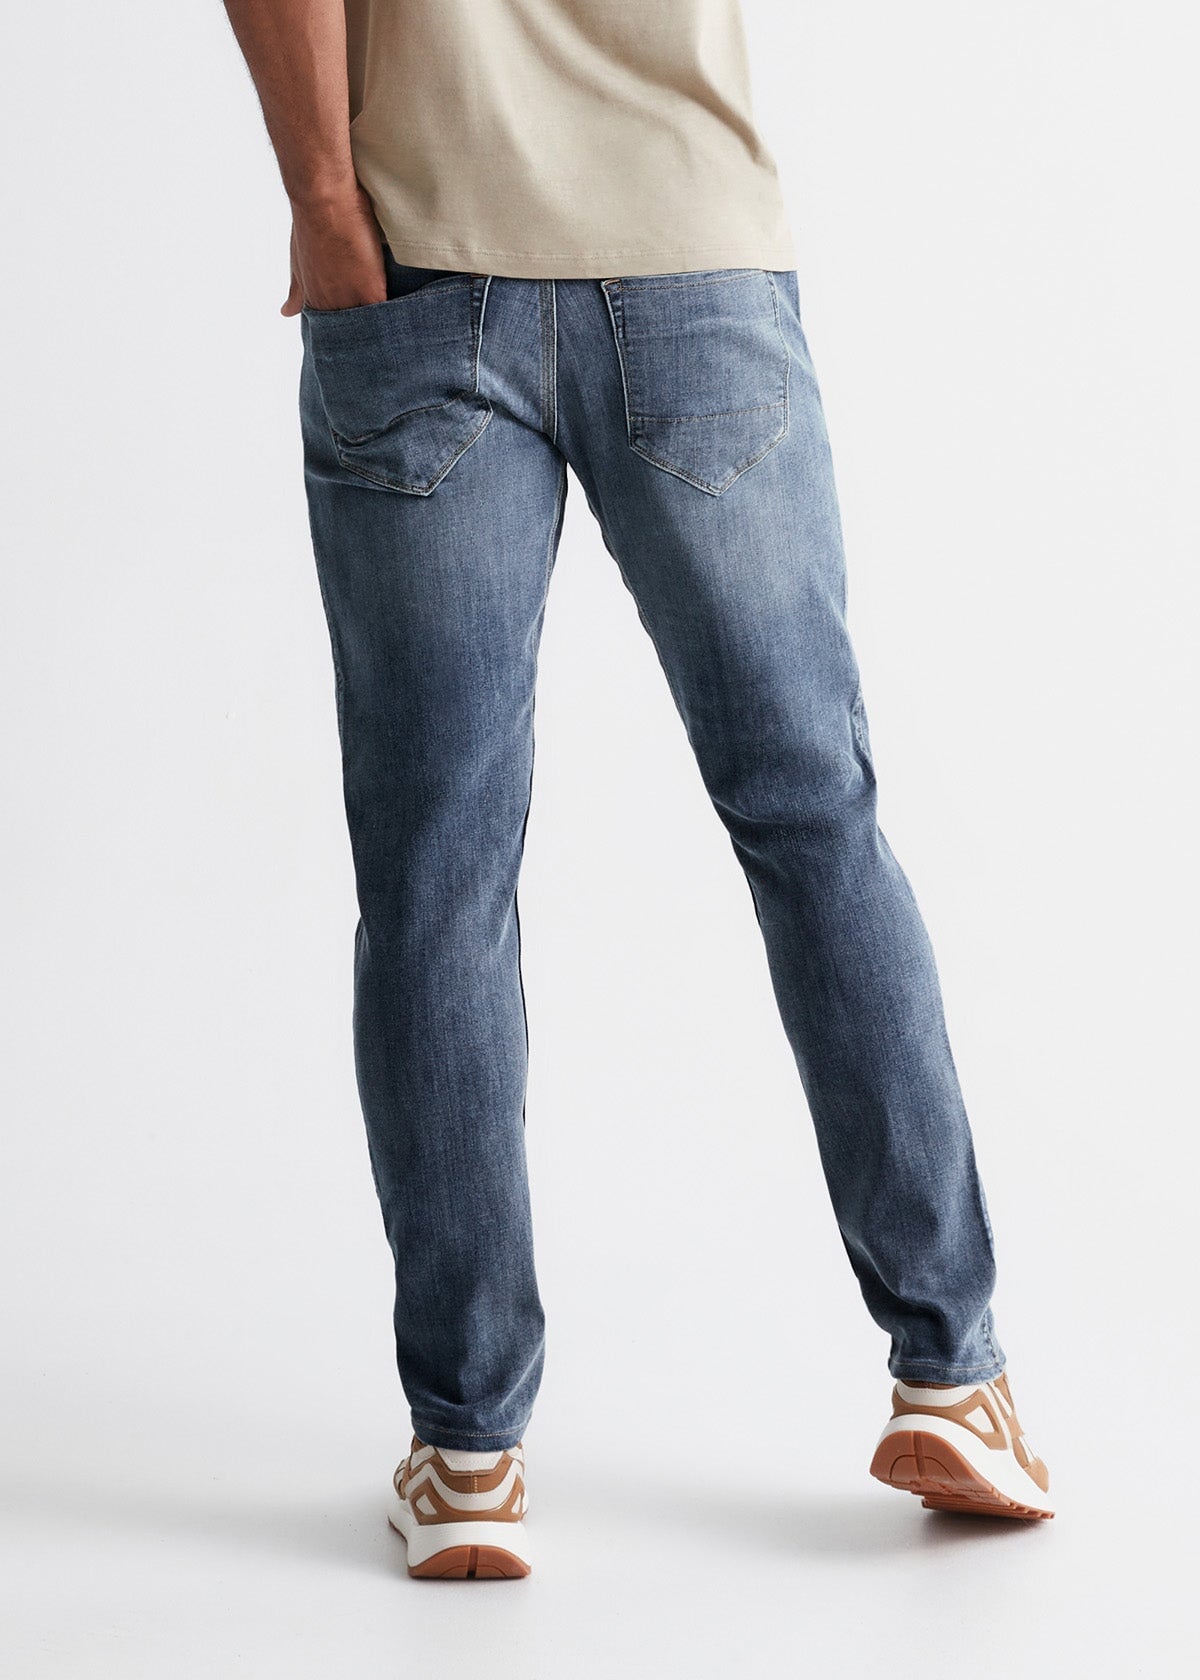 DU/ER N2X Relaxed Fit Jeans Biege Stretch Pants Nature2X Men's Size 38x34